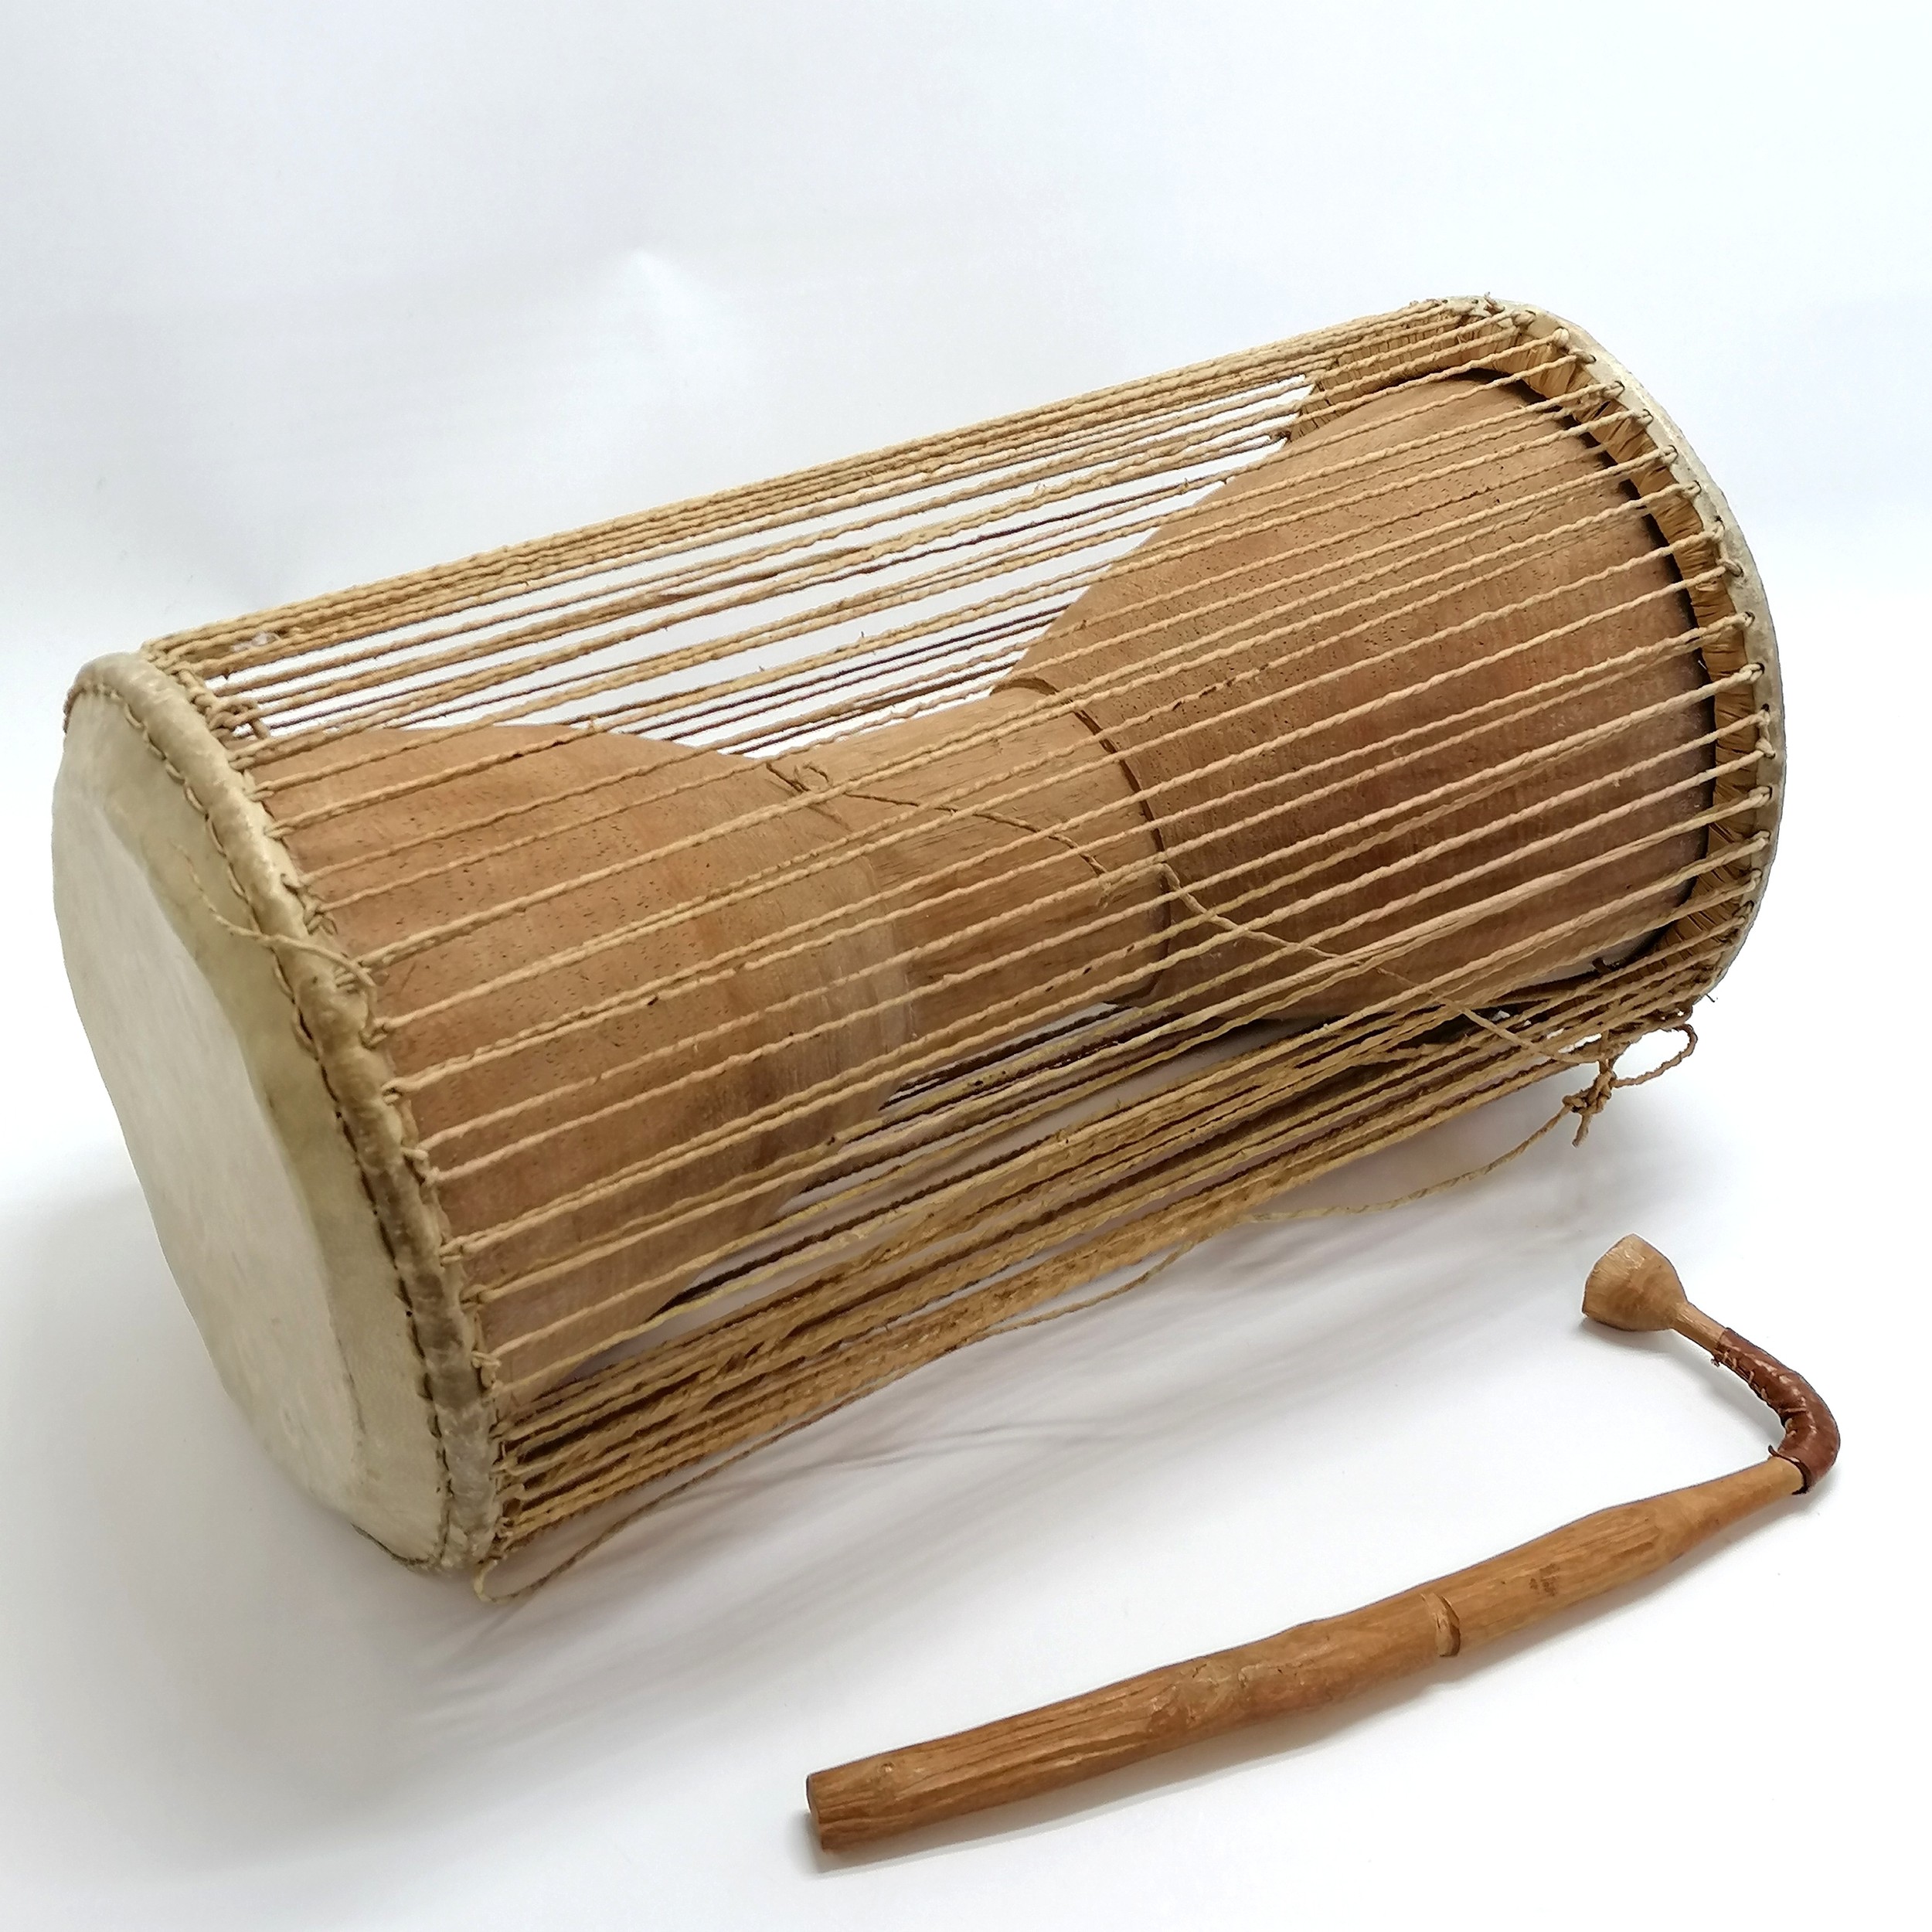 African original talking drum with original drumstick / beater - 42cm high & 21cm diameter - Image 2 of 2